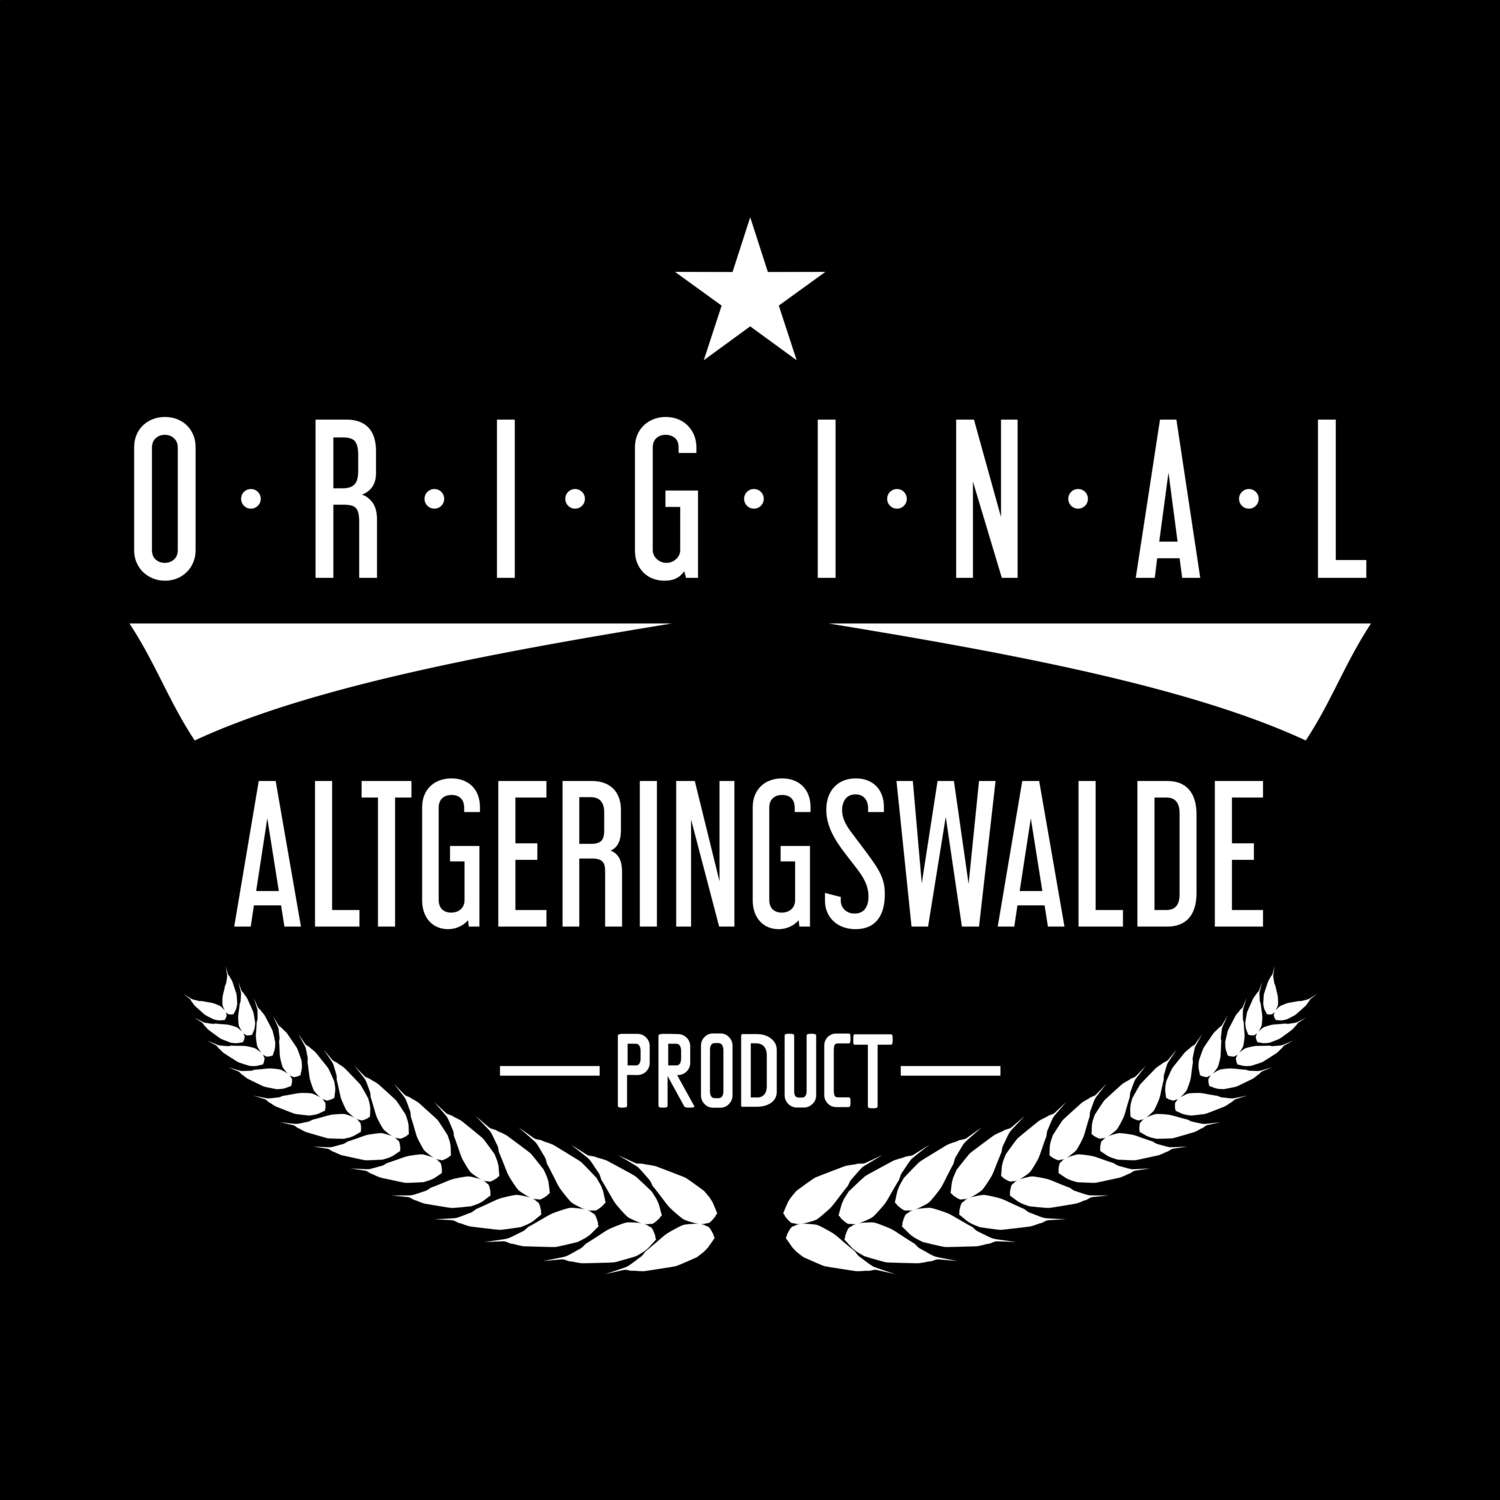 Altgeringswalde T-Shirt »Original Product«